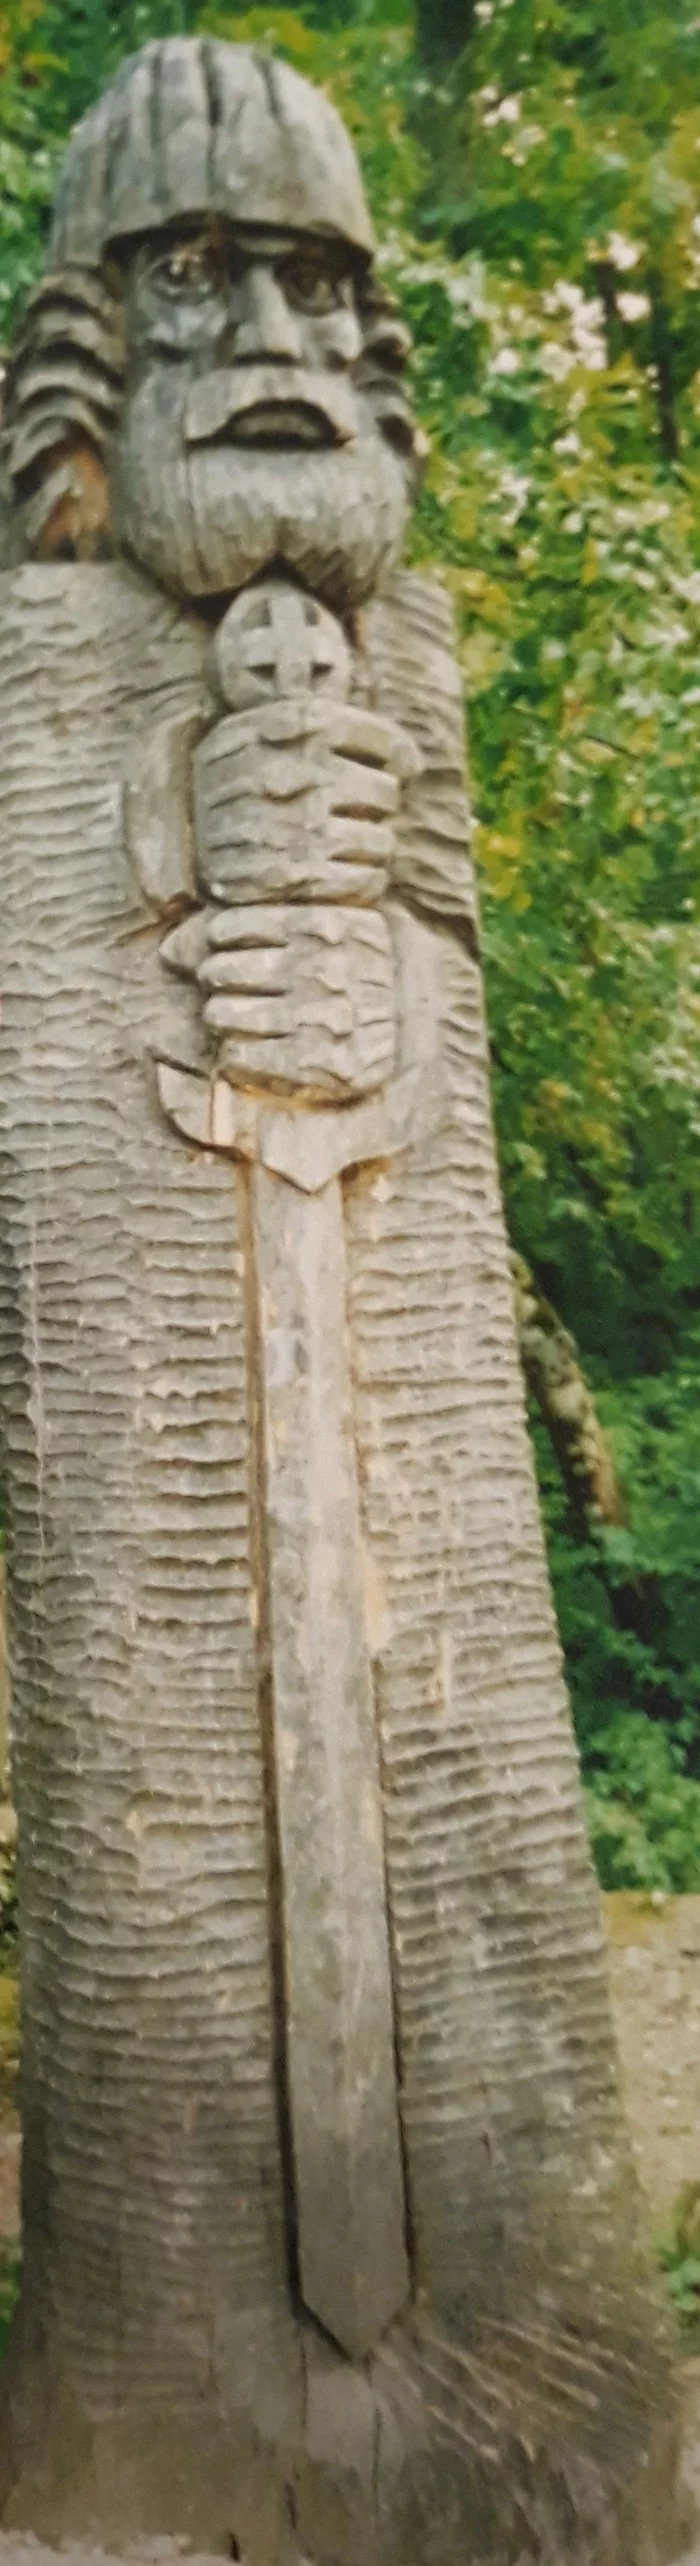 Search for a totem in Jubga - My, A loss, The strength of the Peekaboo, Longpost, Tuapse district, Краснодарский Край, Dzhubga, Wood sculpture, 